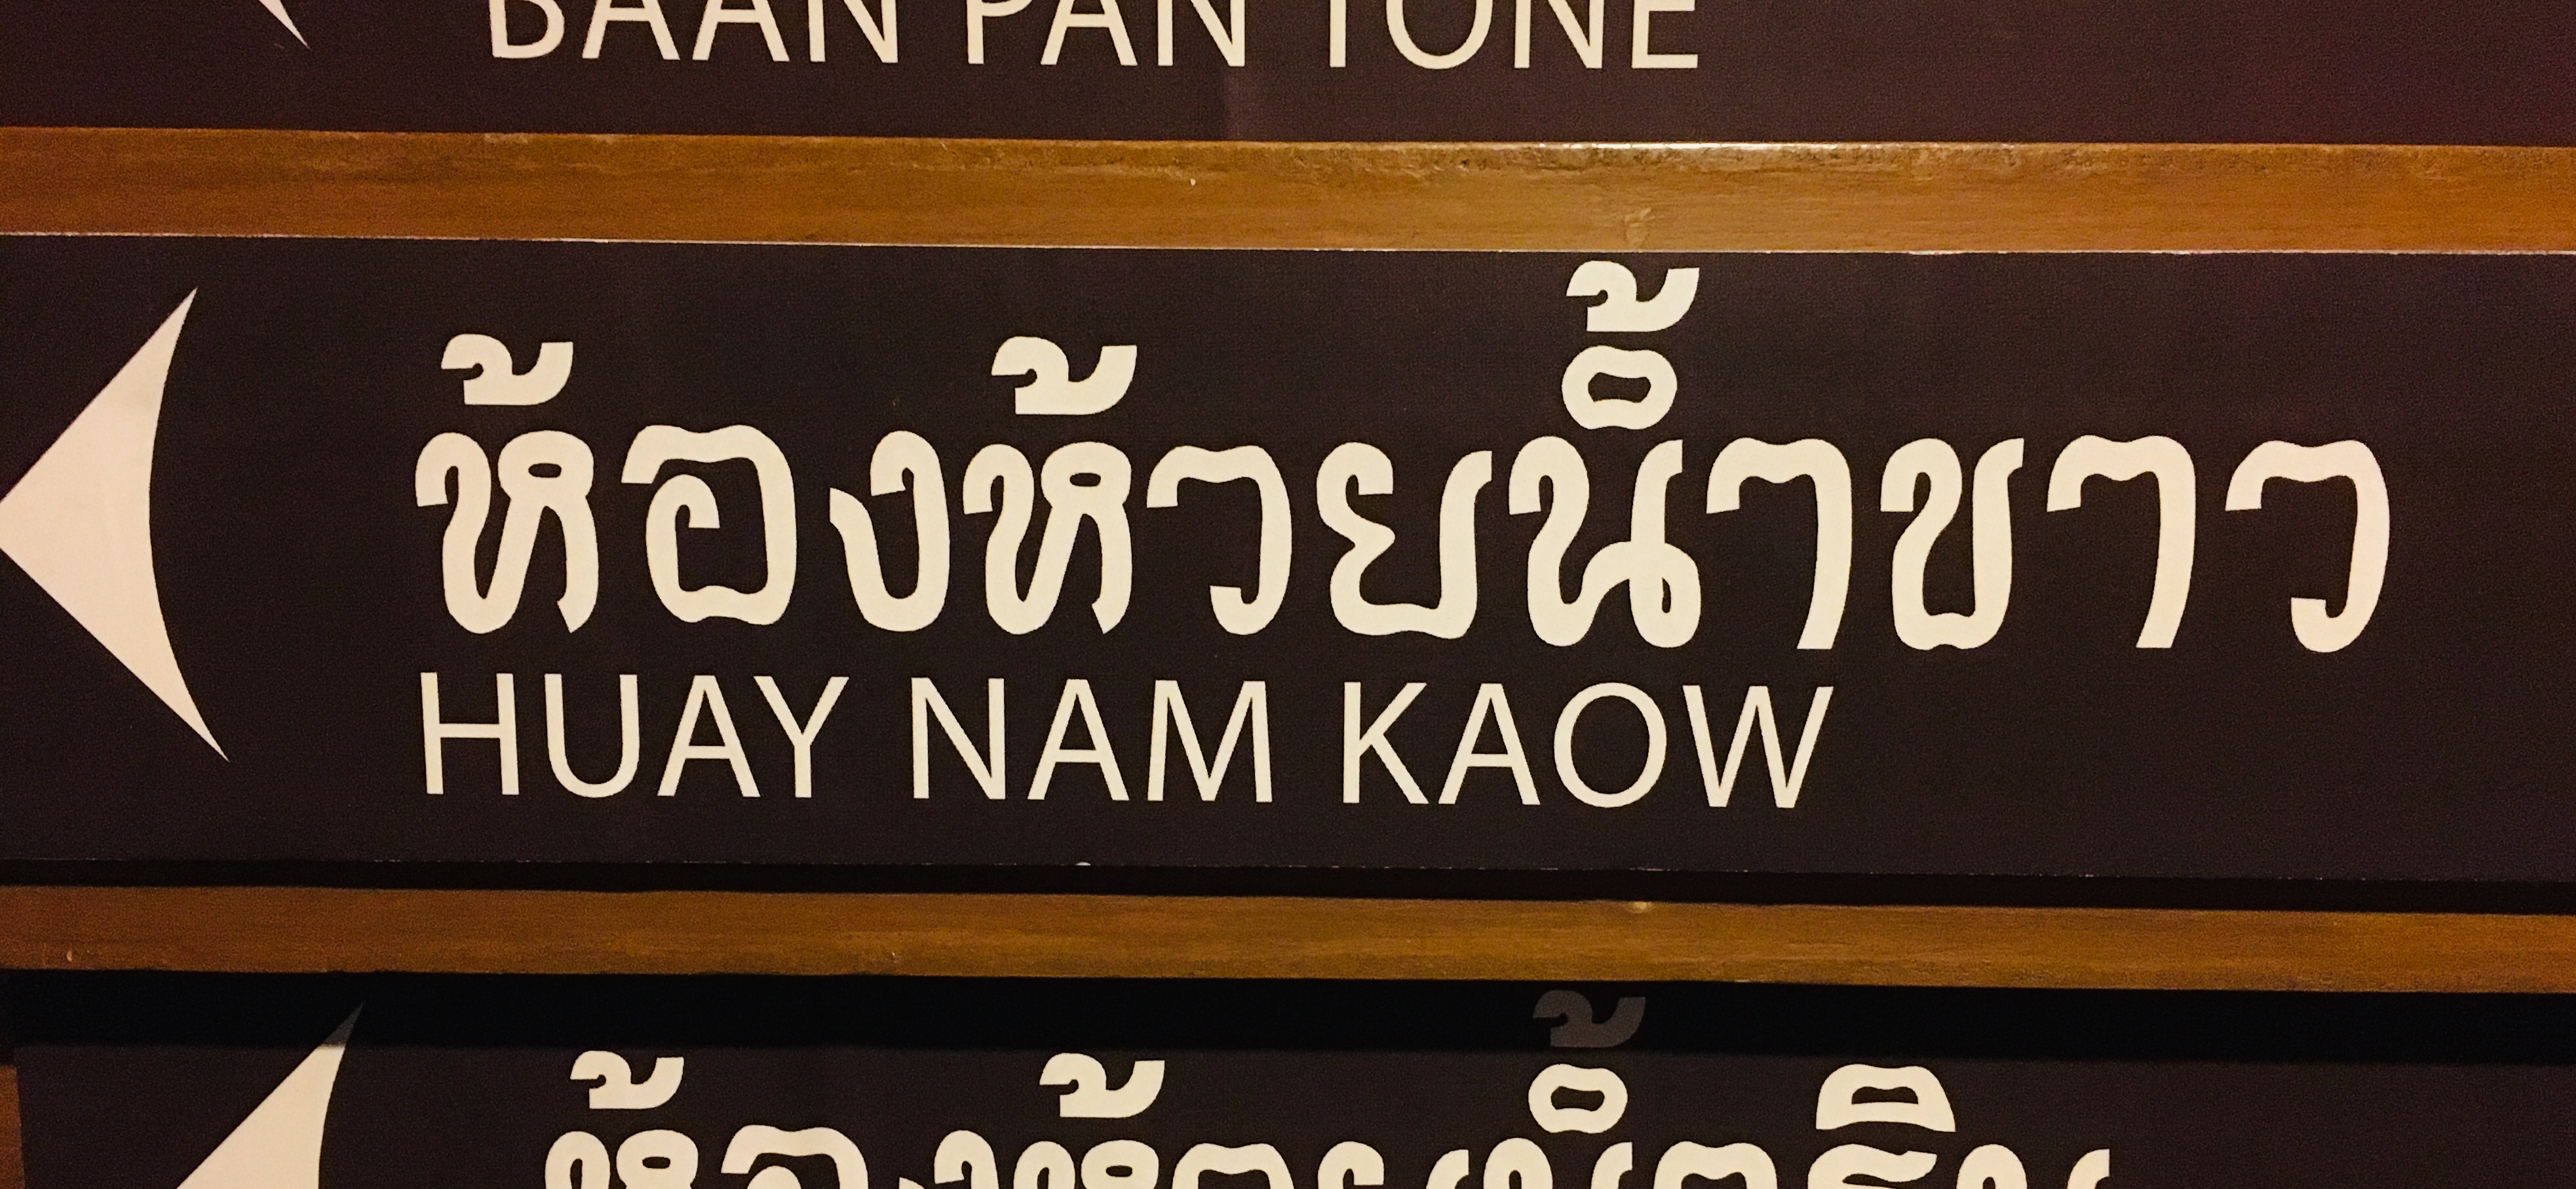 Huay Nam Kaow sign